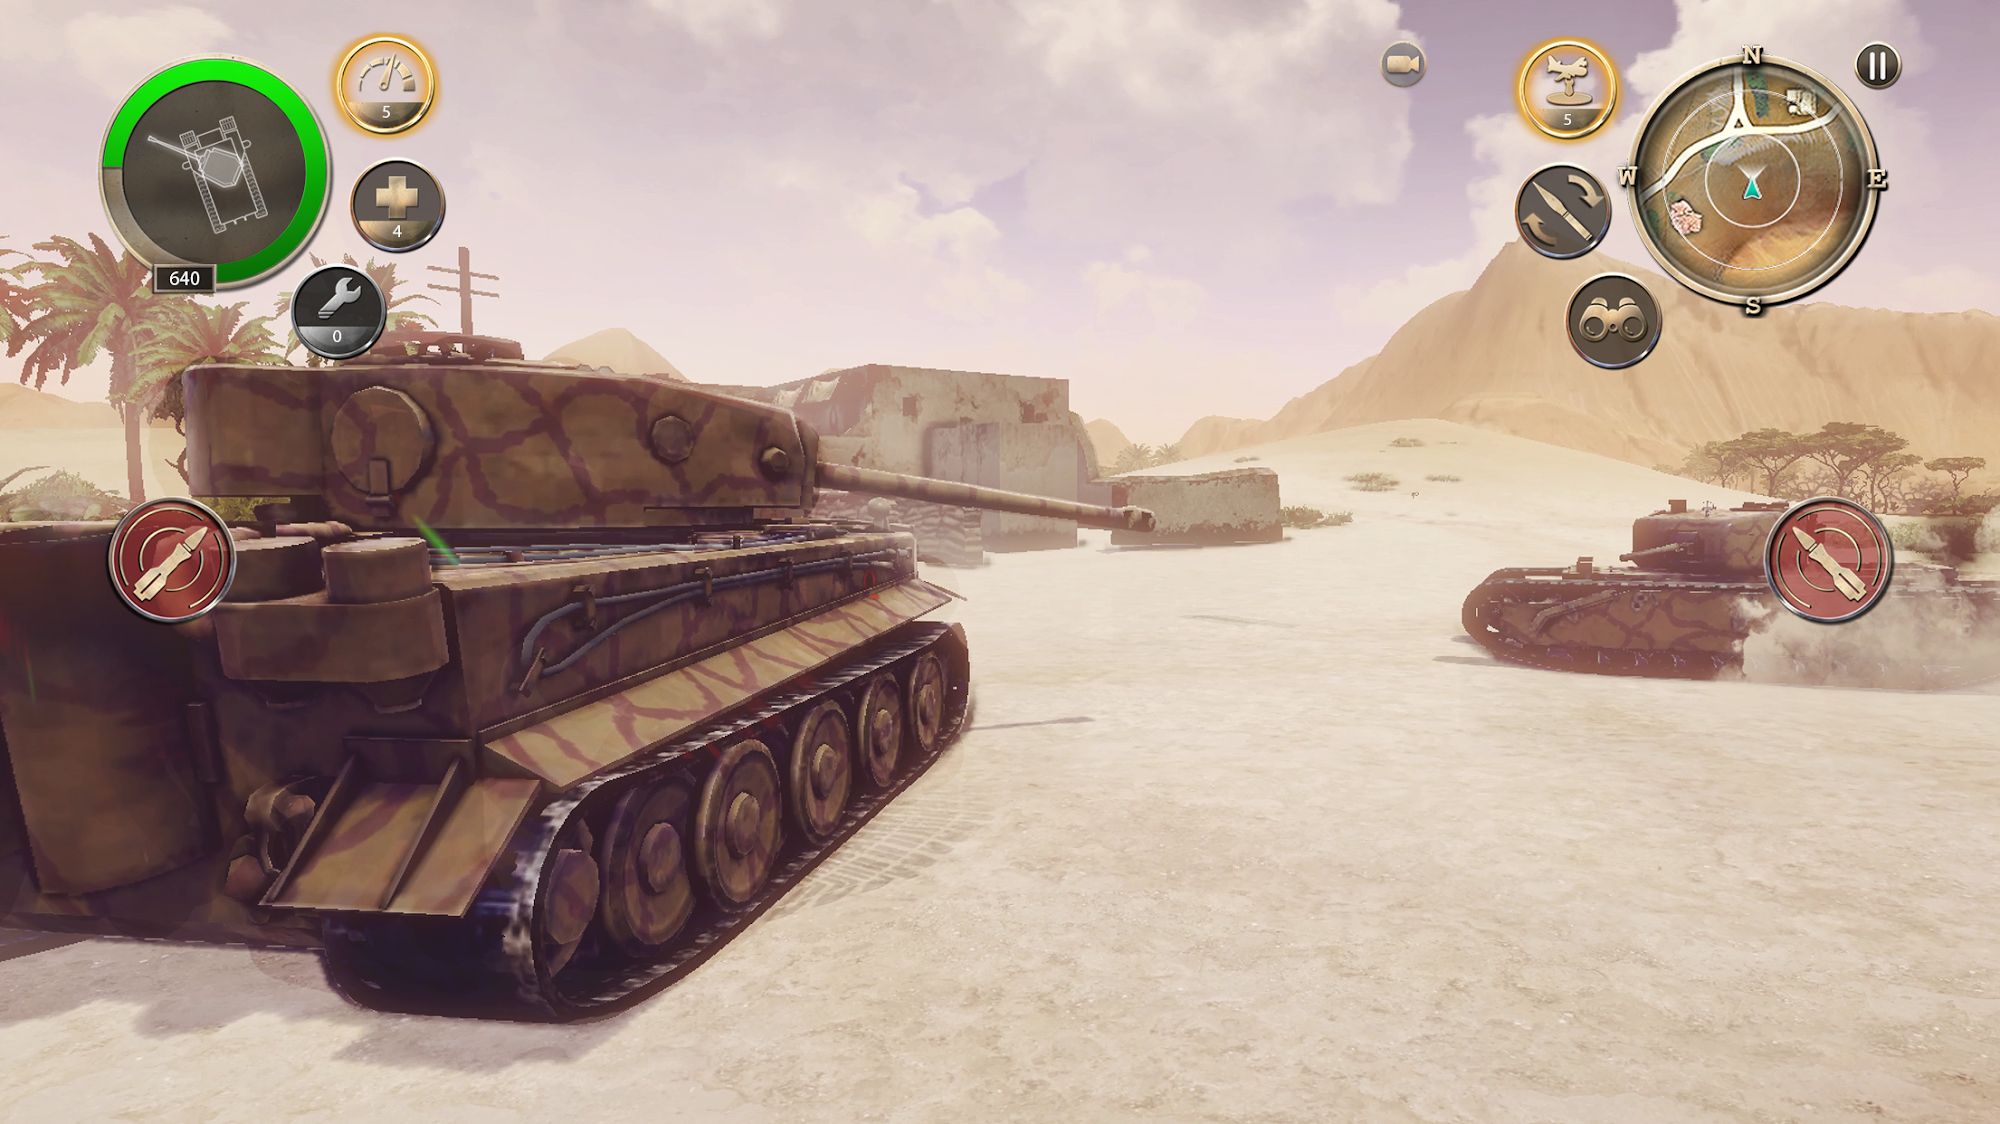 Infinite Tanks WW2 - Android game screenshots.